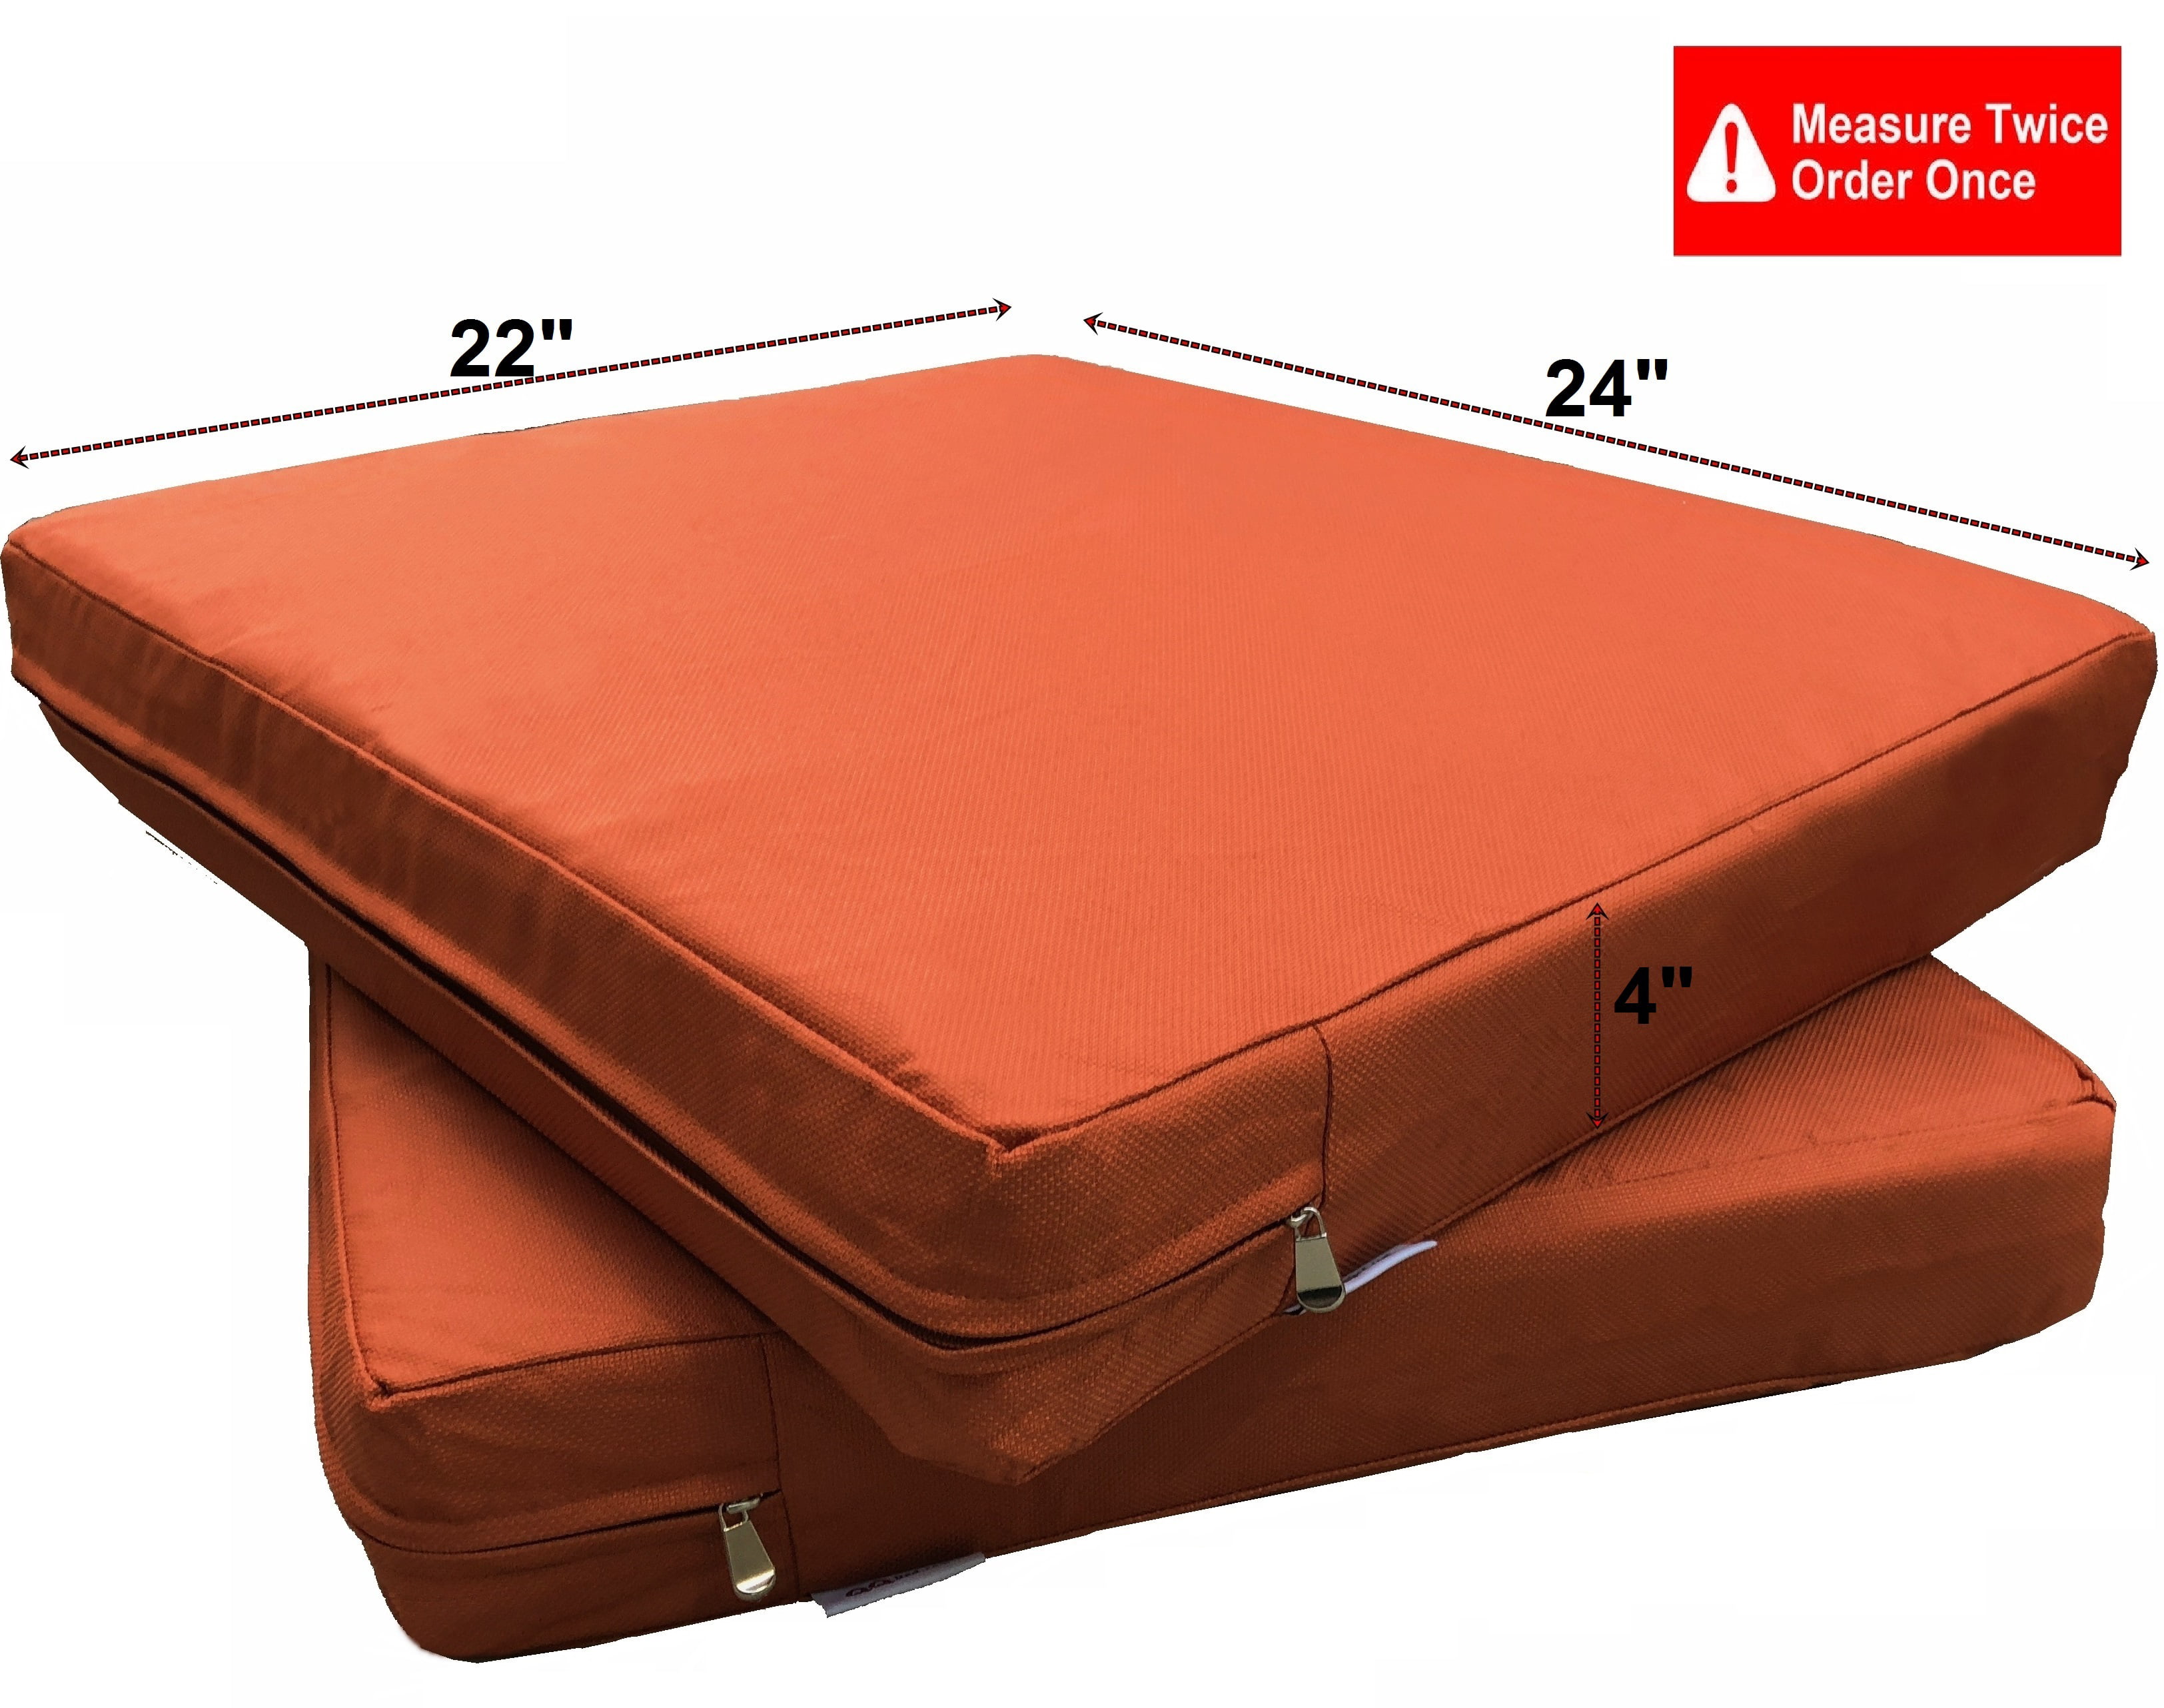 2 Pack 24"x22"x4" Navy Outdoor Deep Seat Memory Foam Waterproof Patio Cushion 